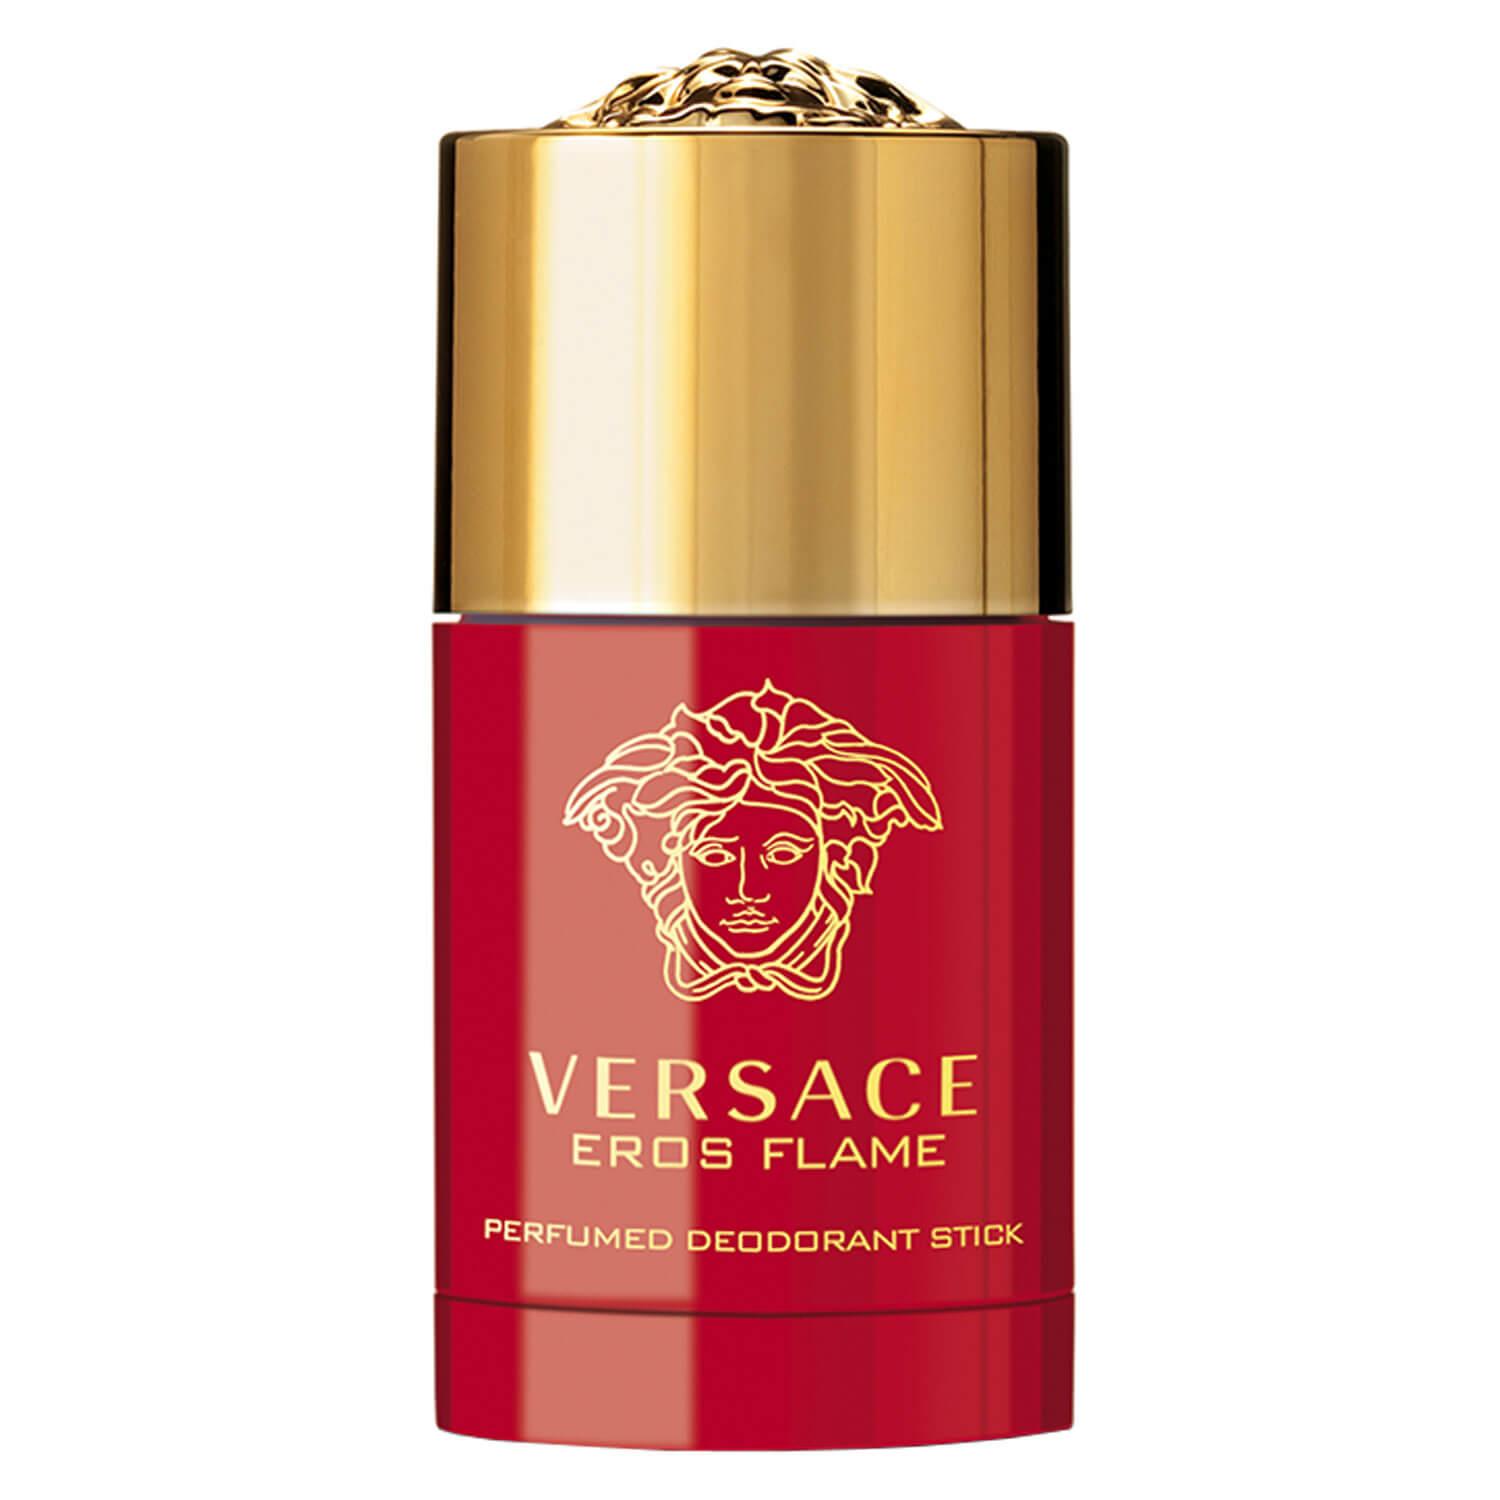 Versace Eros - Flame Deodorant Stick